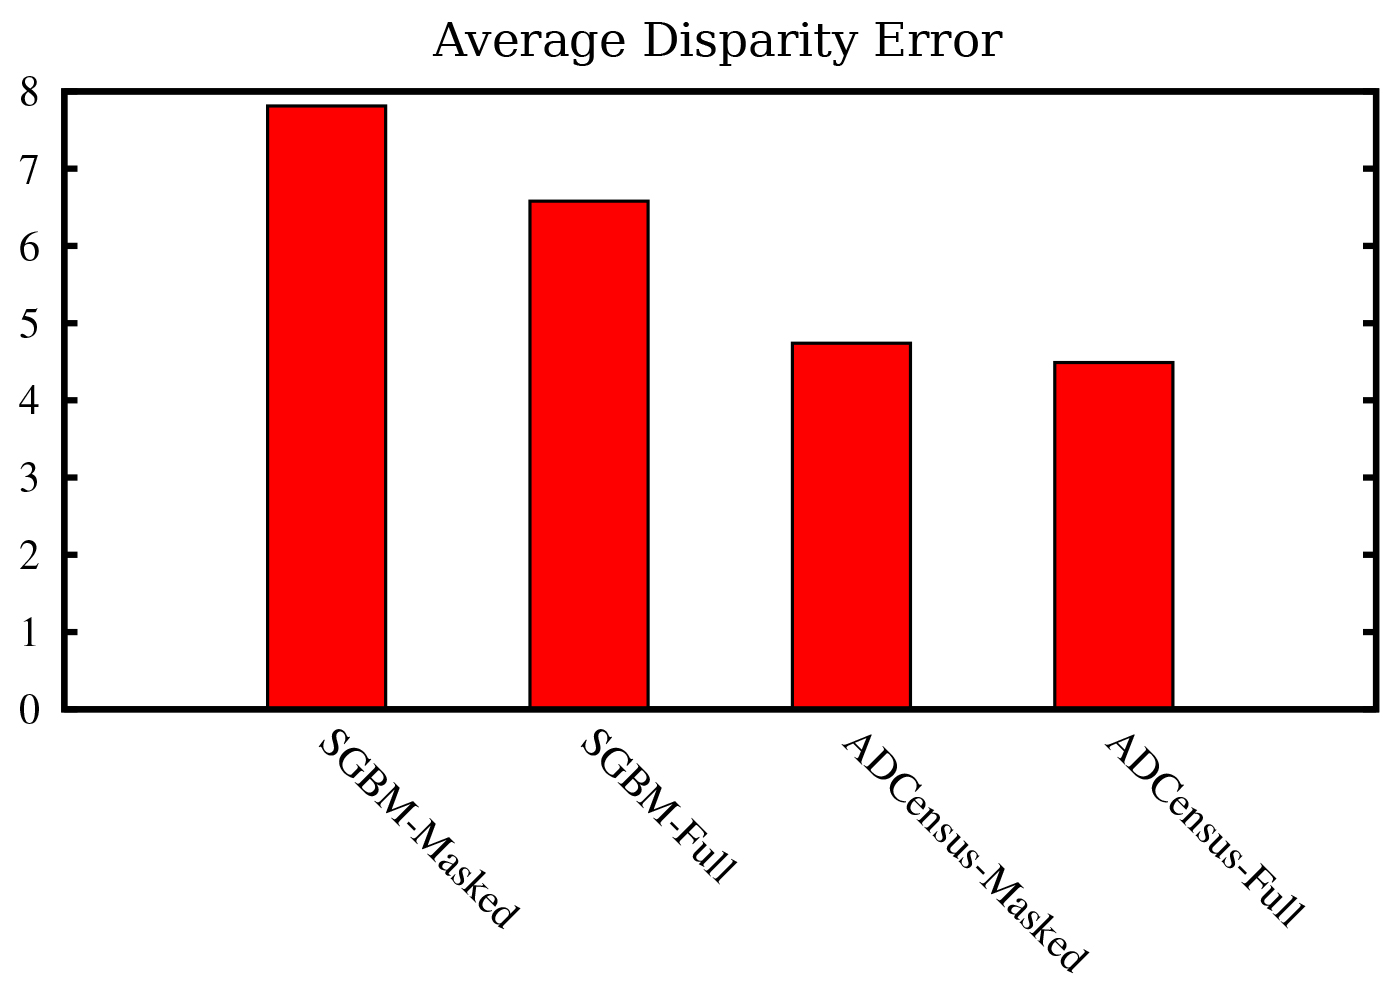 Average disparity error for both SGBM and ADCensusB